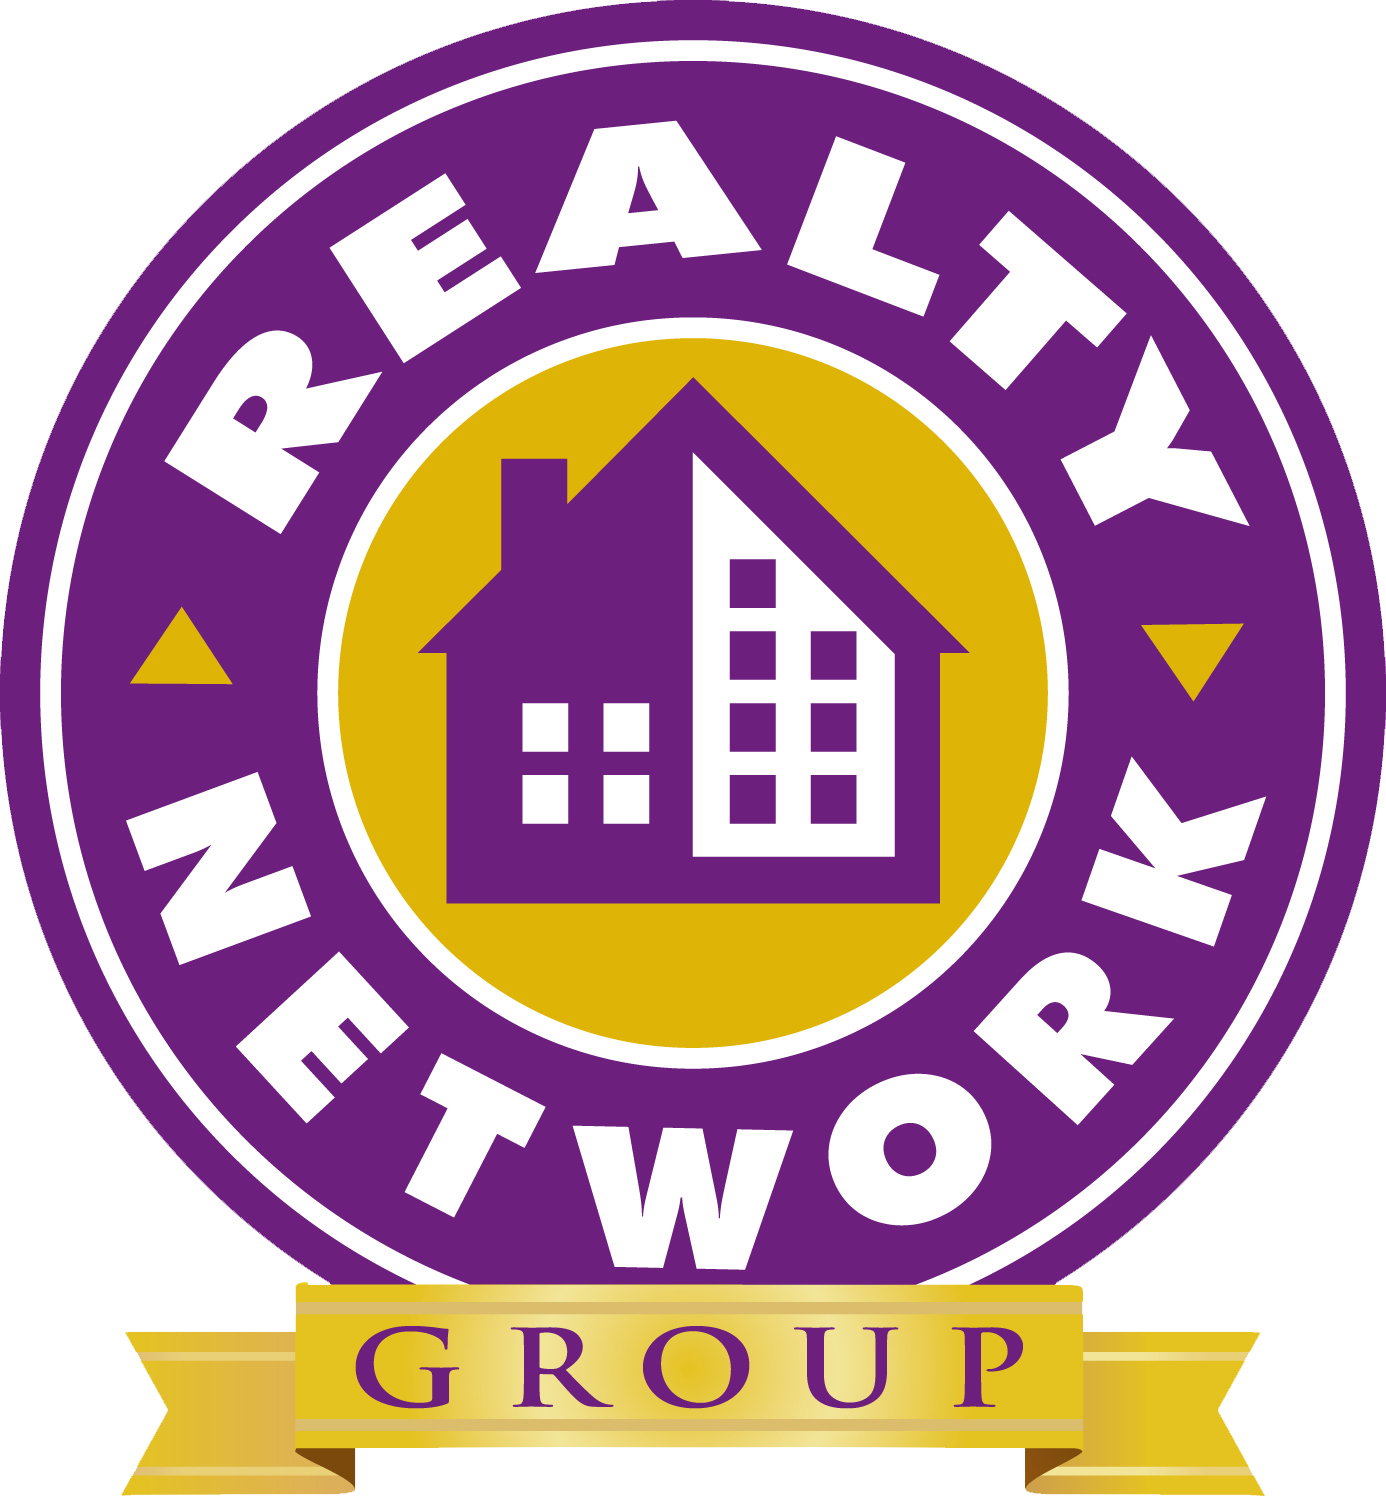 Esg агентство. Pin Group / агентство недвижимости. Realty. Central partnership logo. Realtor networking.